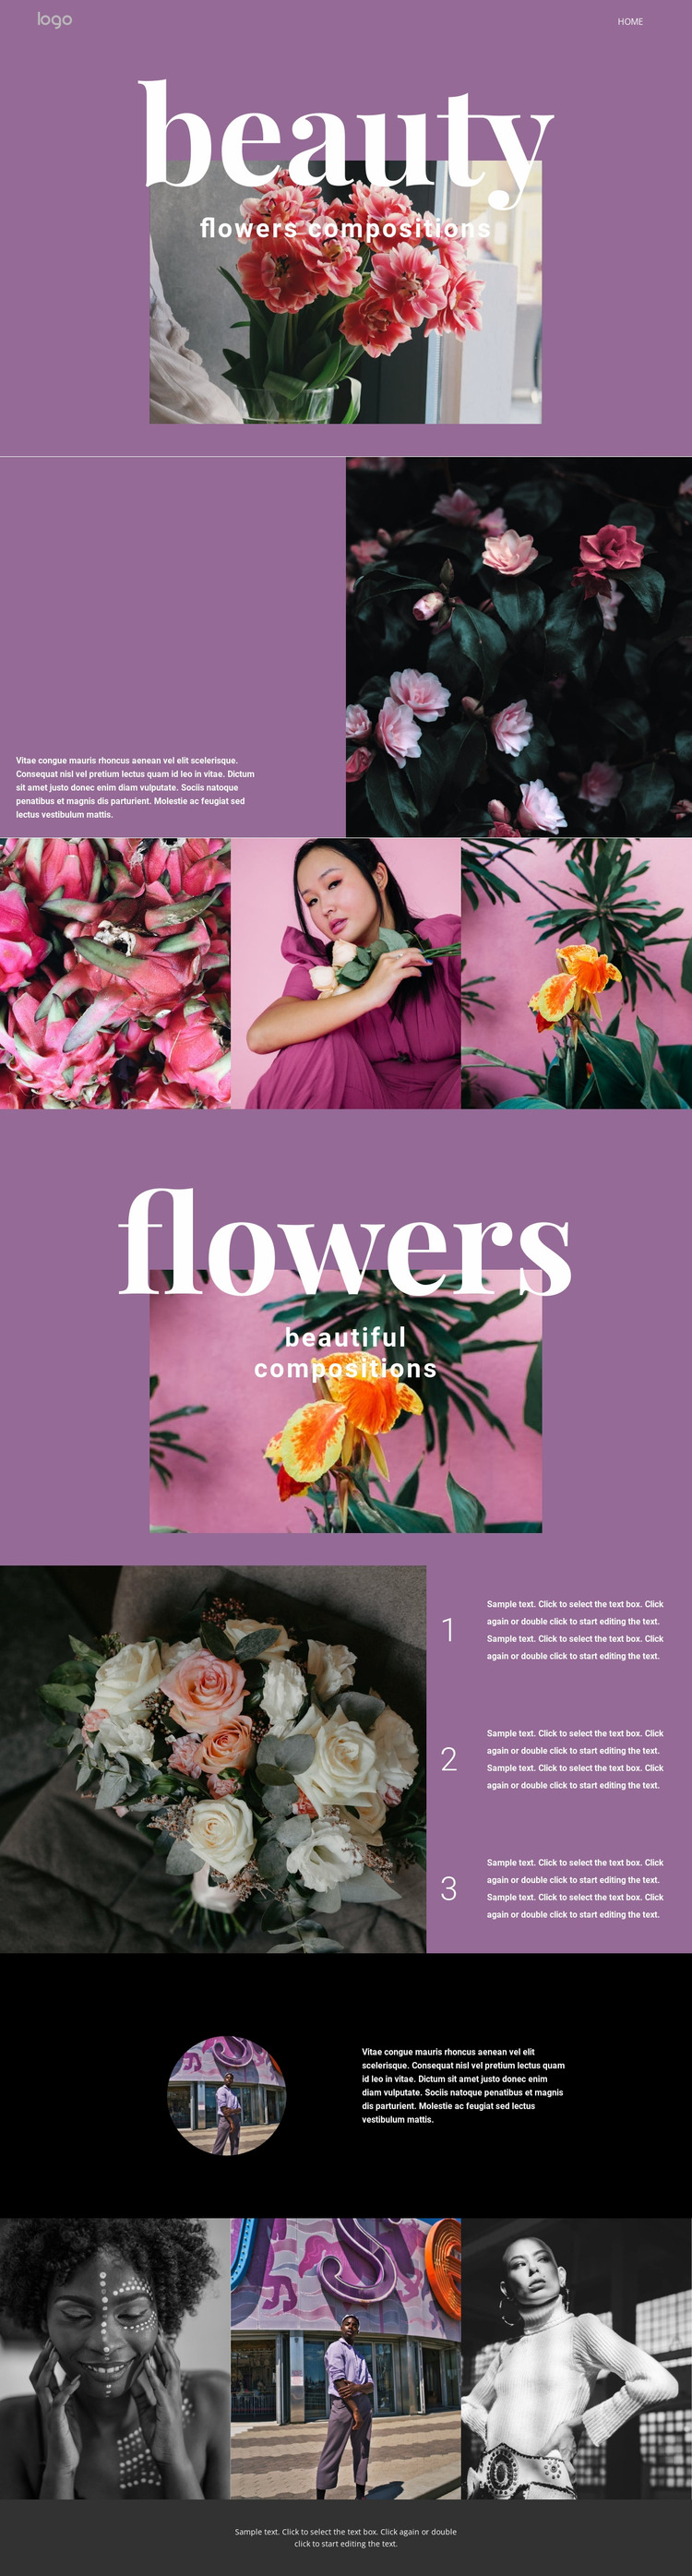 Flower salon Website Mockup